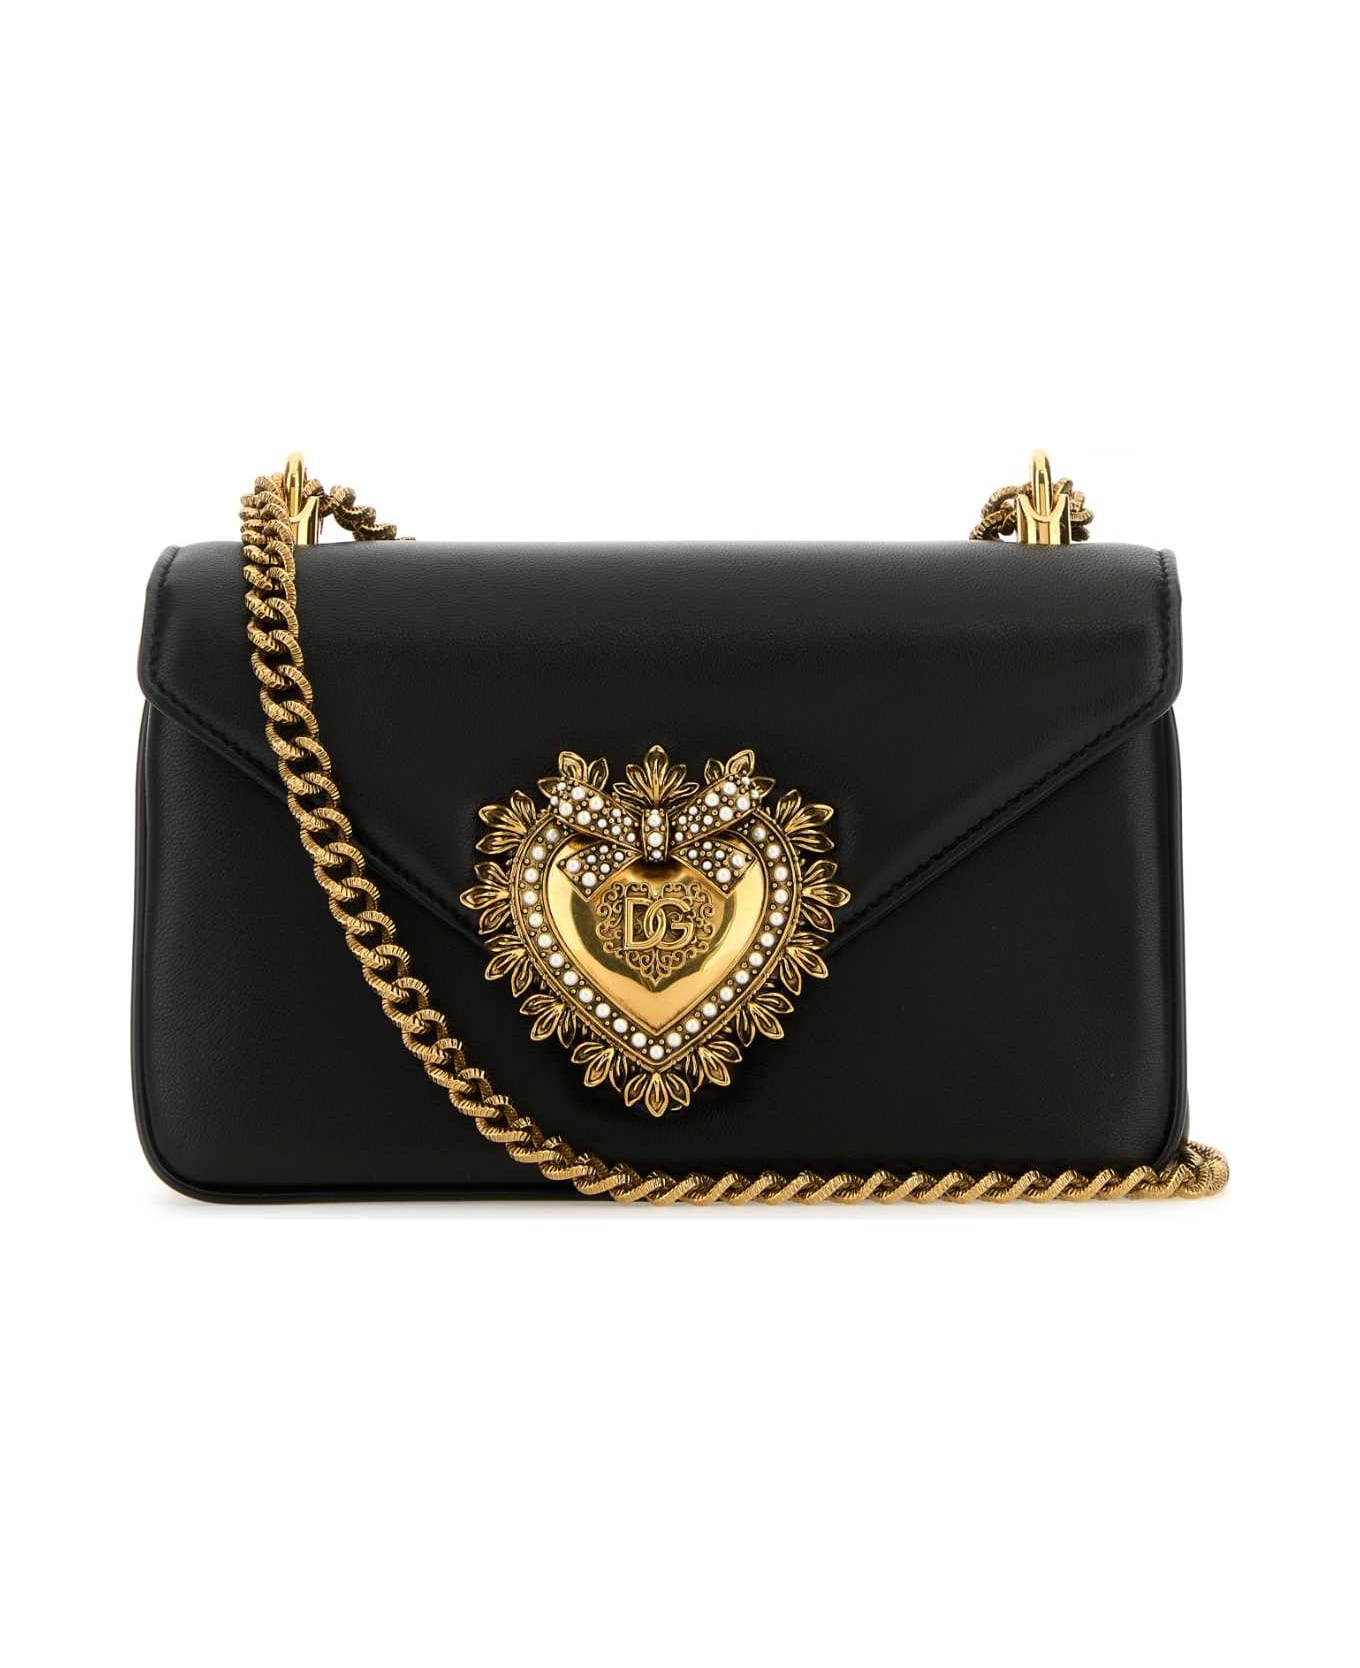 Dolce & Gabbana Black Nappa Leather Devotion Shoulder Bag - NERO